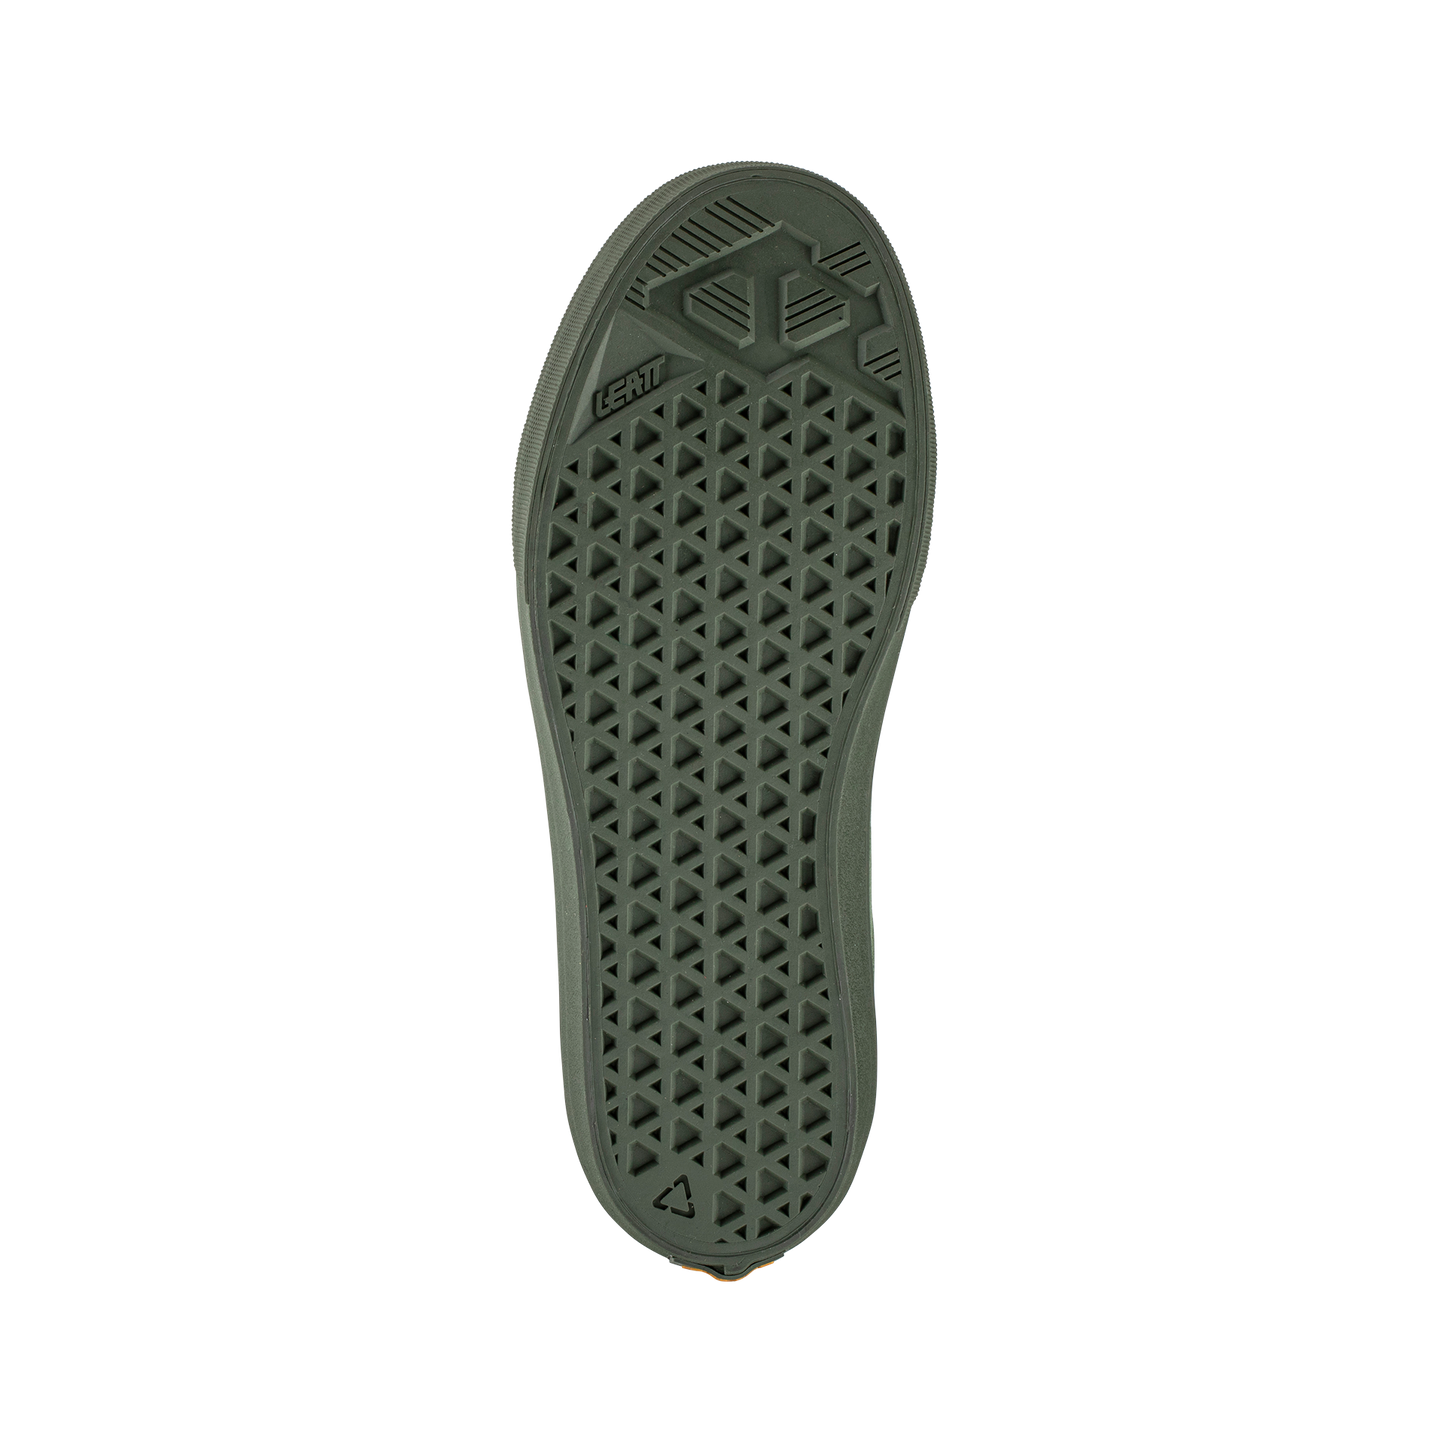 Shoe 1.0 Flat - PINE